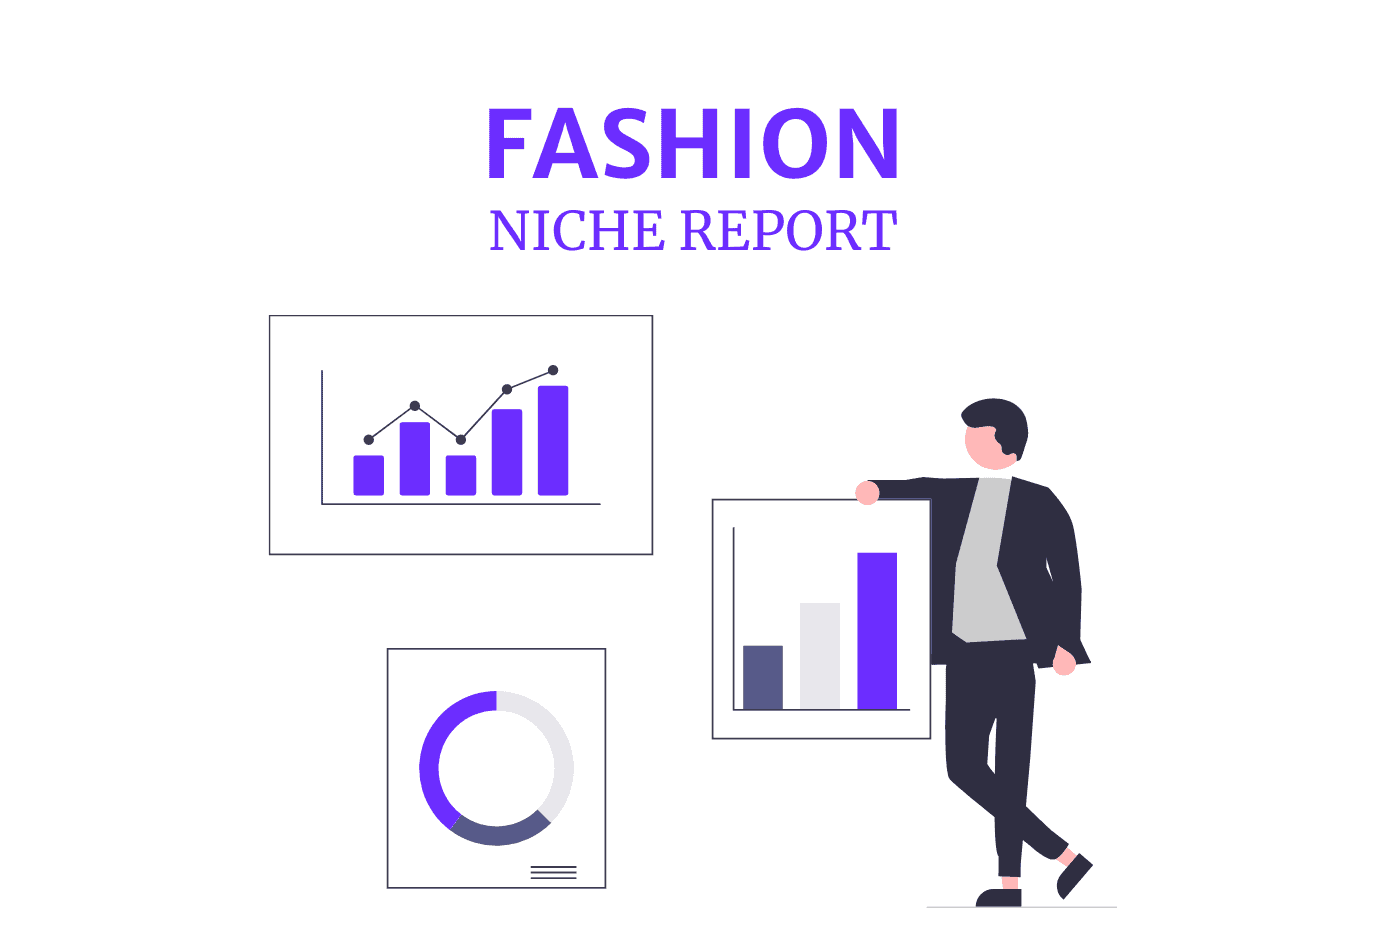 Fashion Niche Report Trends, Ideas, and Tips. The Niche